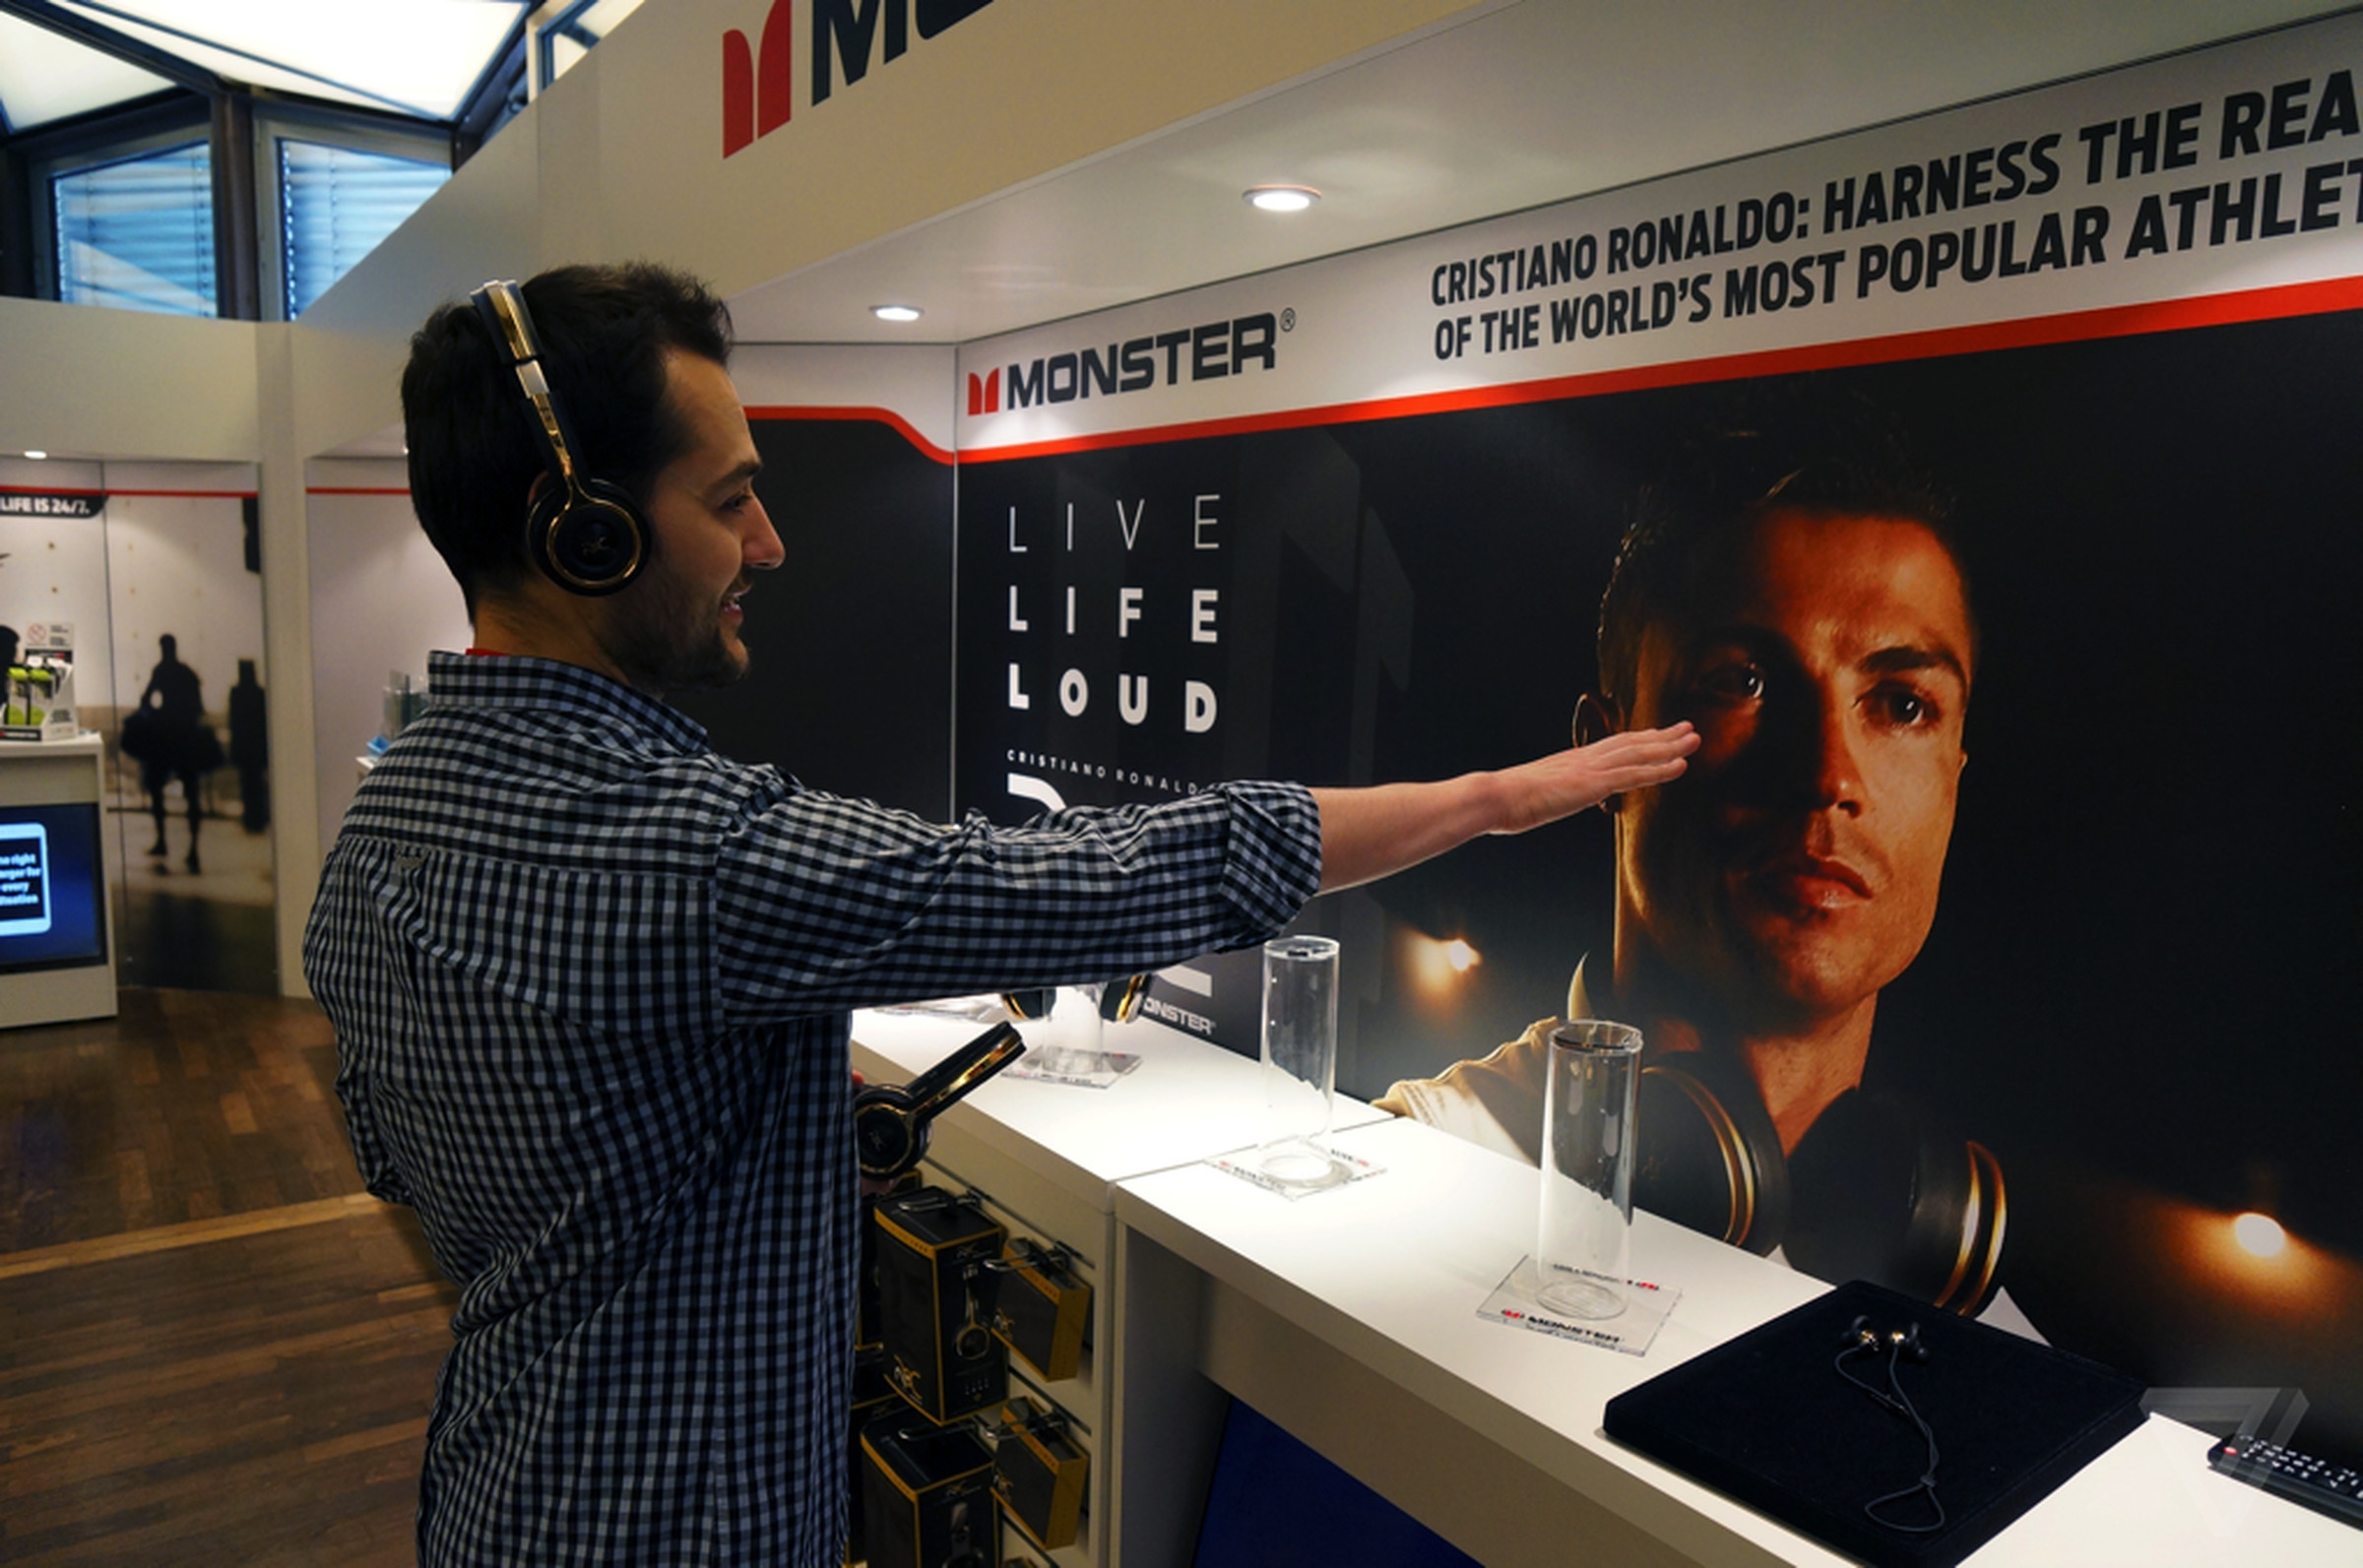 Cristiano Ronaldo ROC Live Life Loud headphones